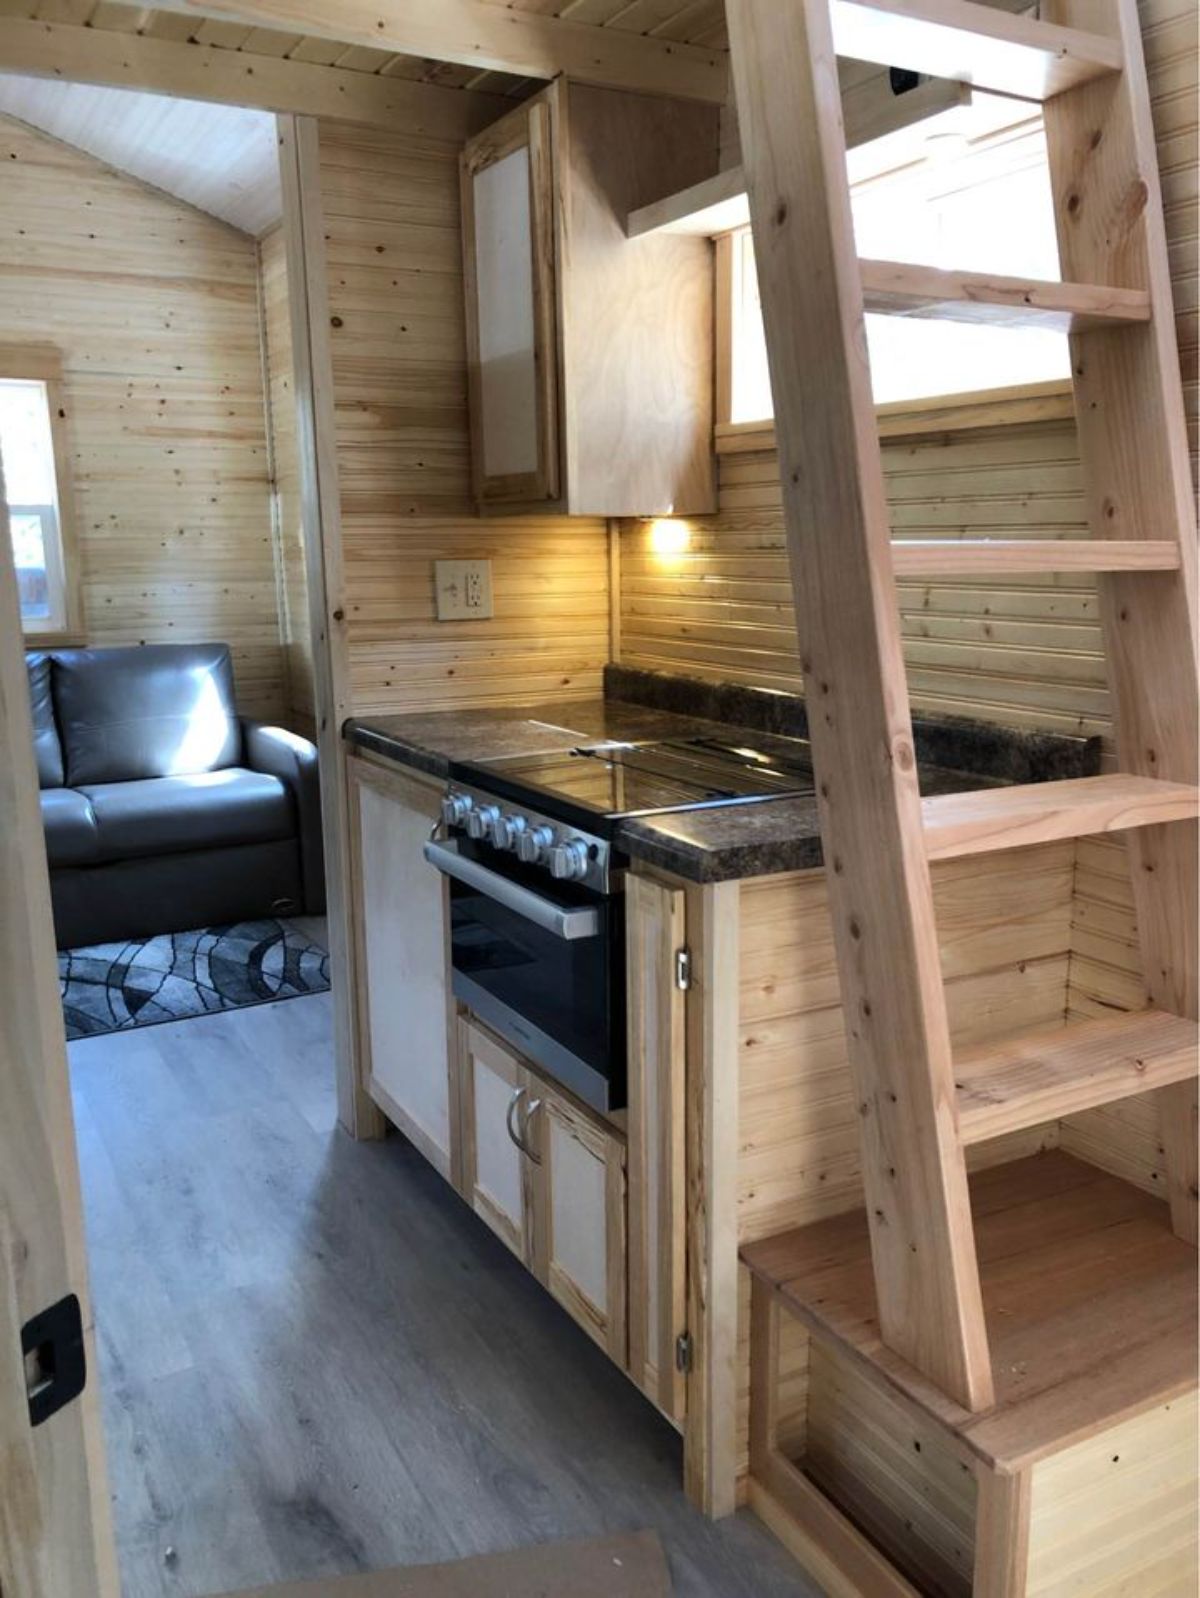 Kitchen area of 200 sf Luxury Wooden Cabin